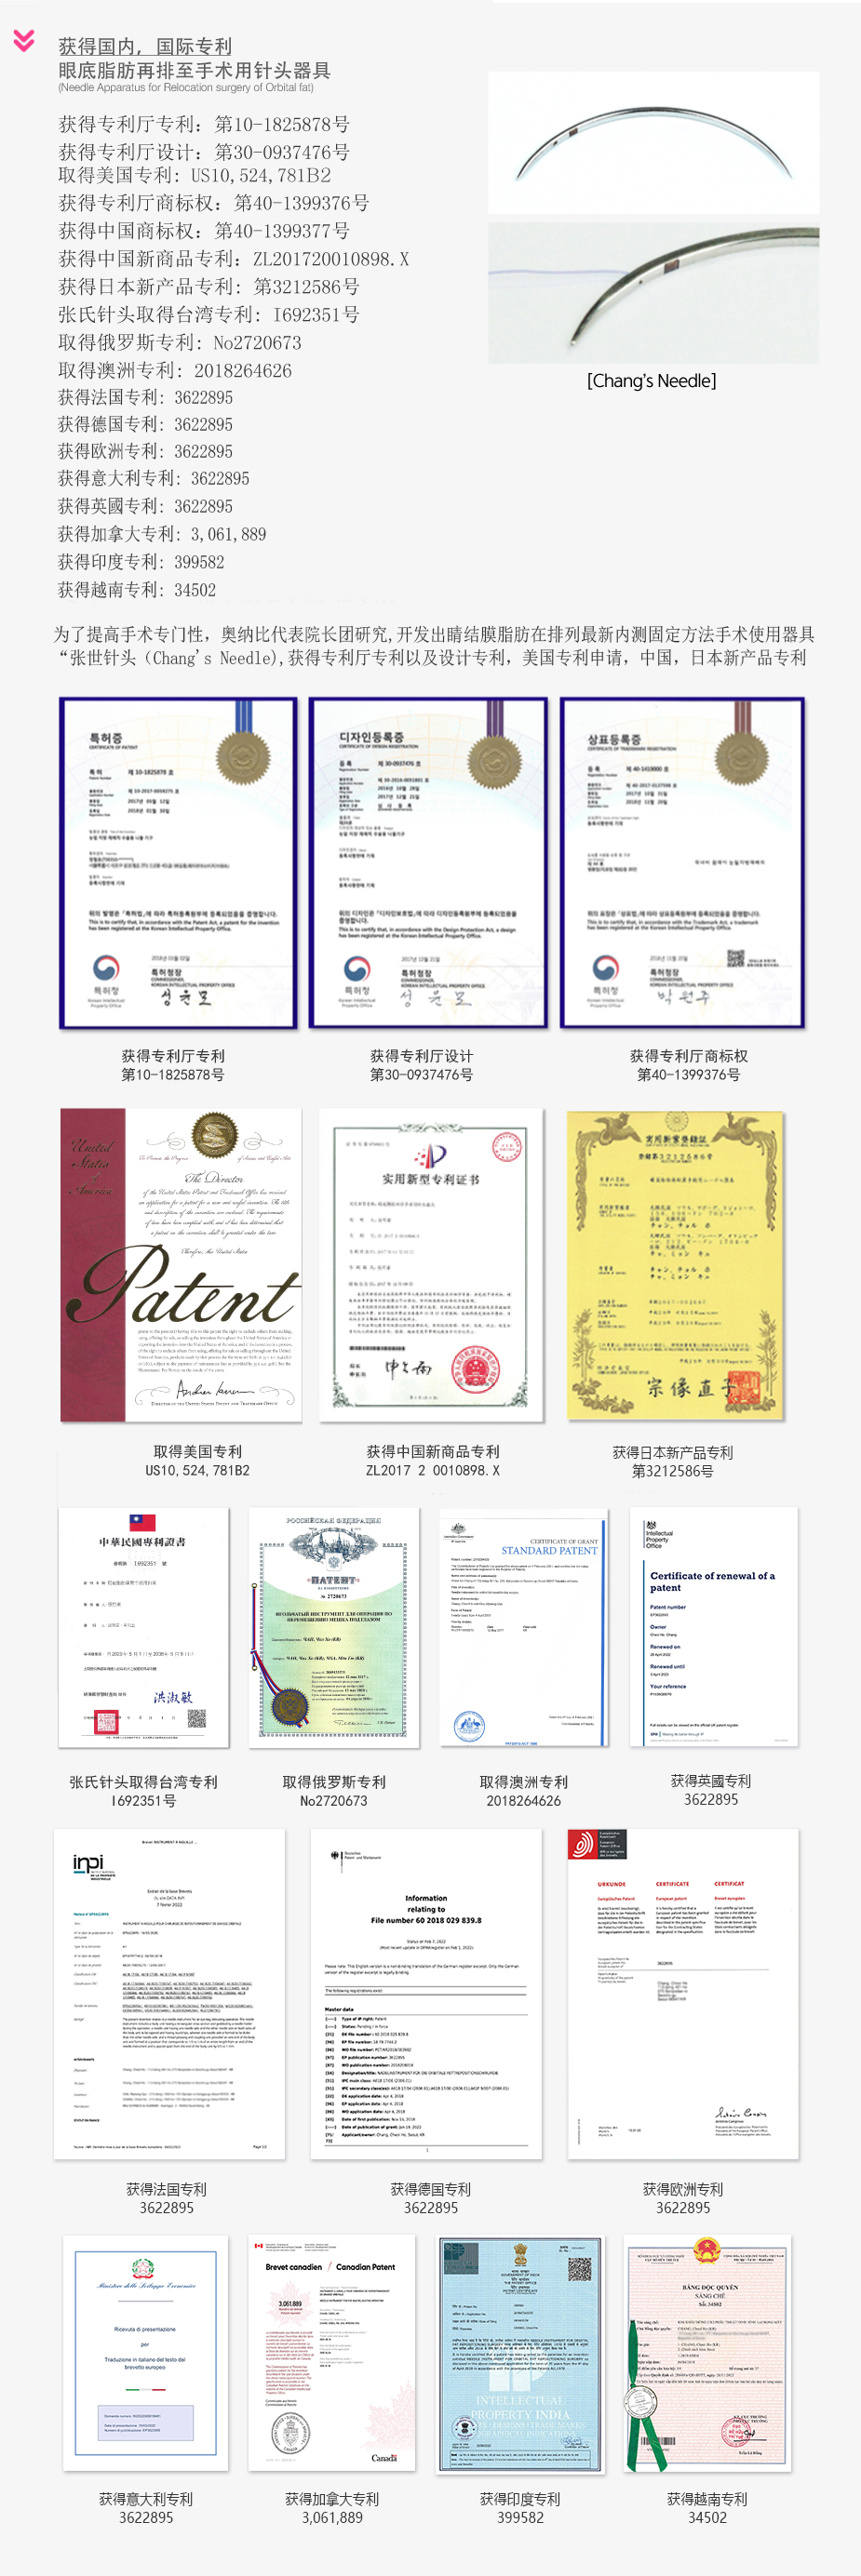 Domestic & International Patent